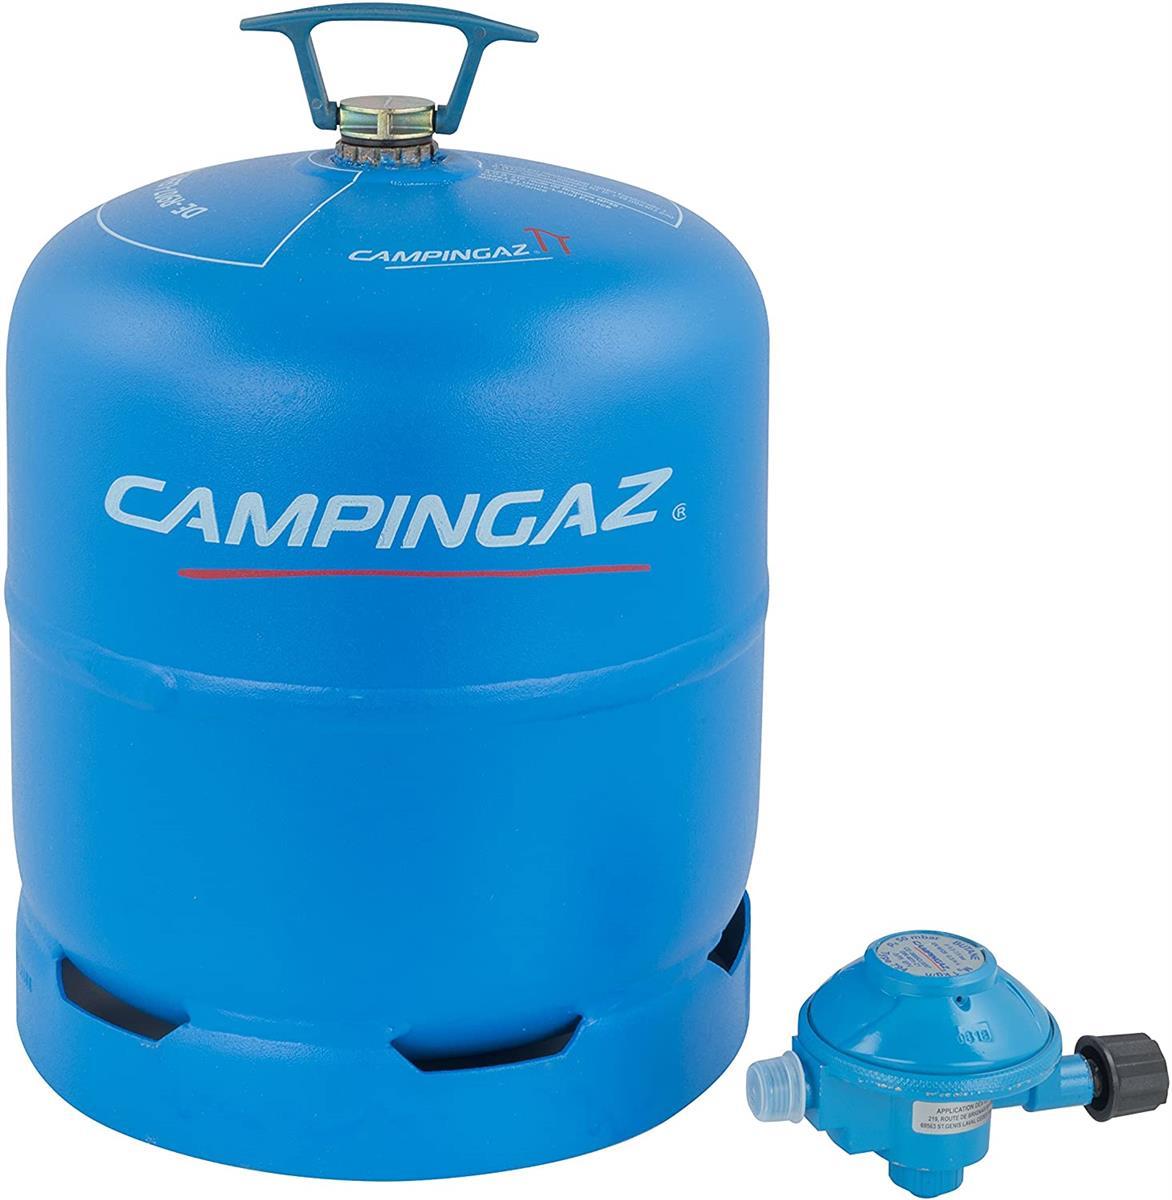 Campingaz R 907 Gasflasche - 2,75 kg Butangas mit 50 mBar Regler im Set